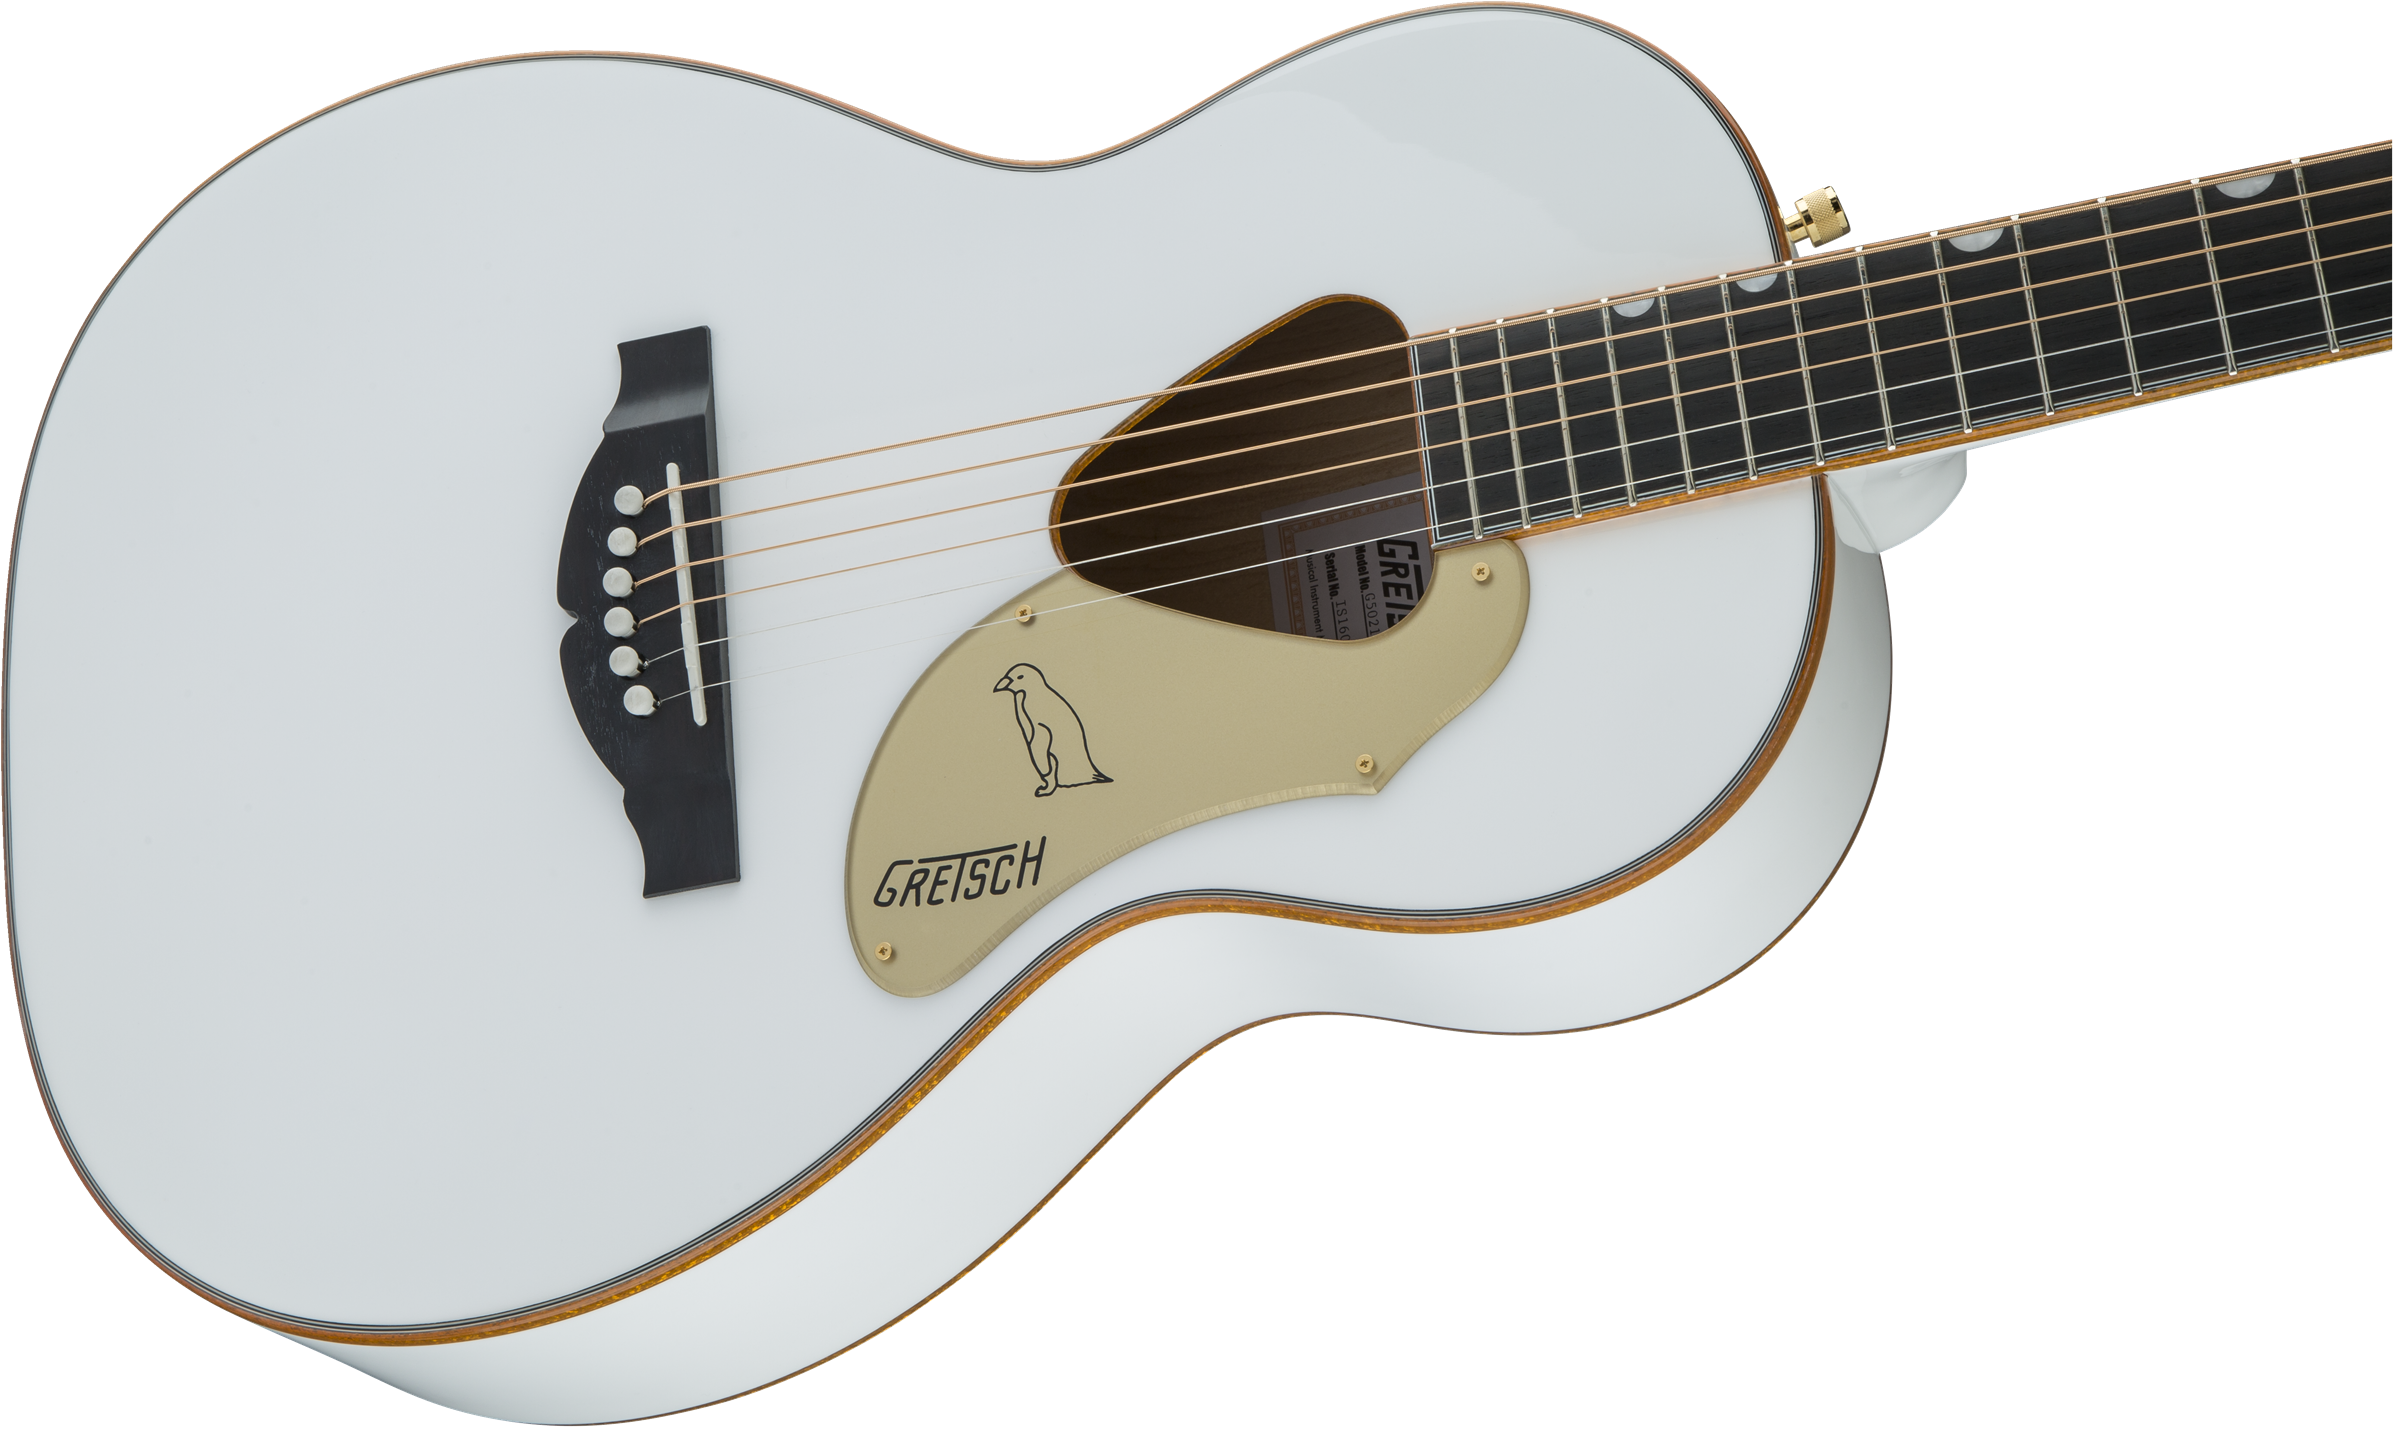 Gretsch G5021wpe Rancher Penguin Parlor Epicea Erable Lau - White - Elektroakustische Gitarre - Variation 3